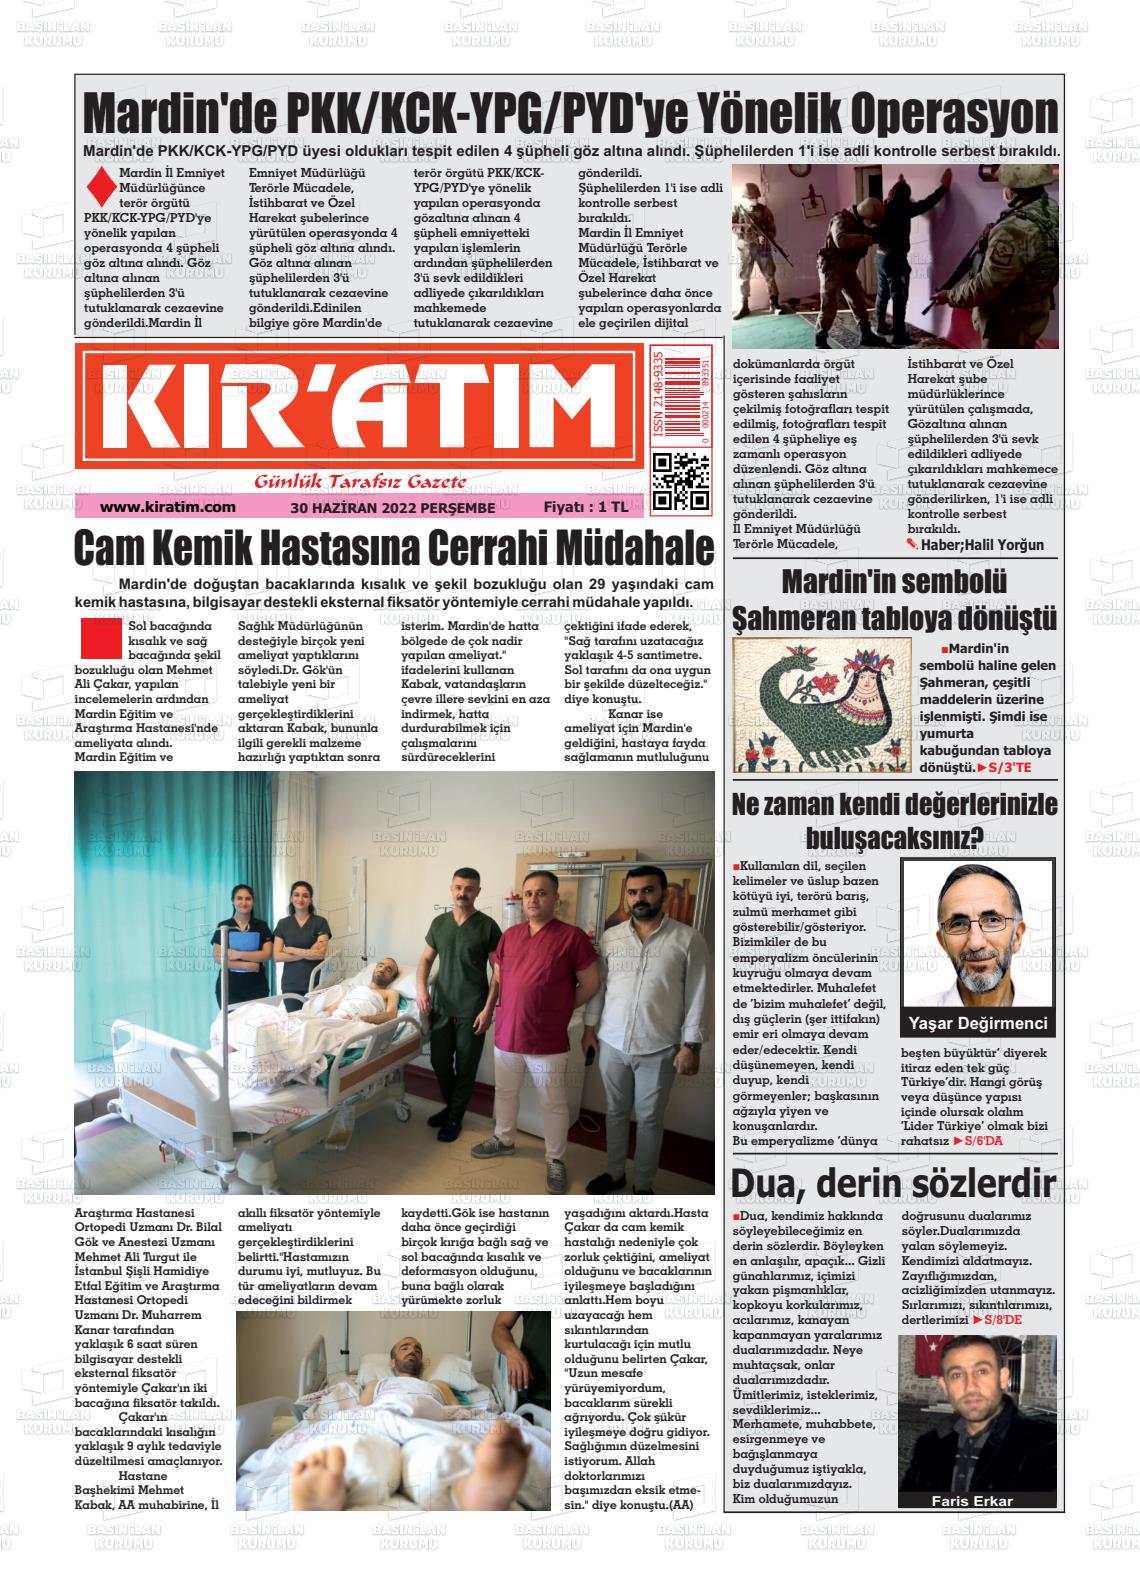 02 Temmuz 2022 Mardinnet Haber Gazete Manşeti